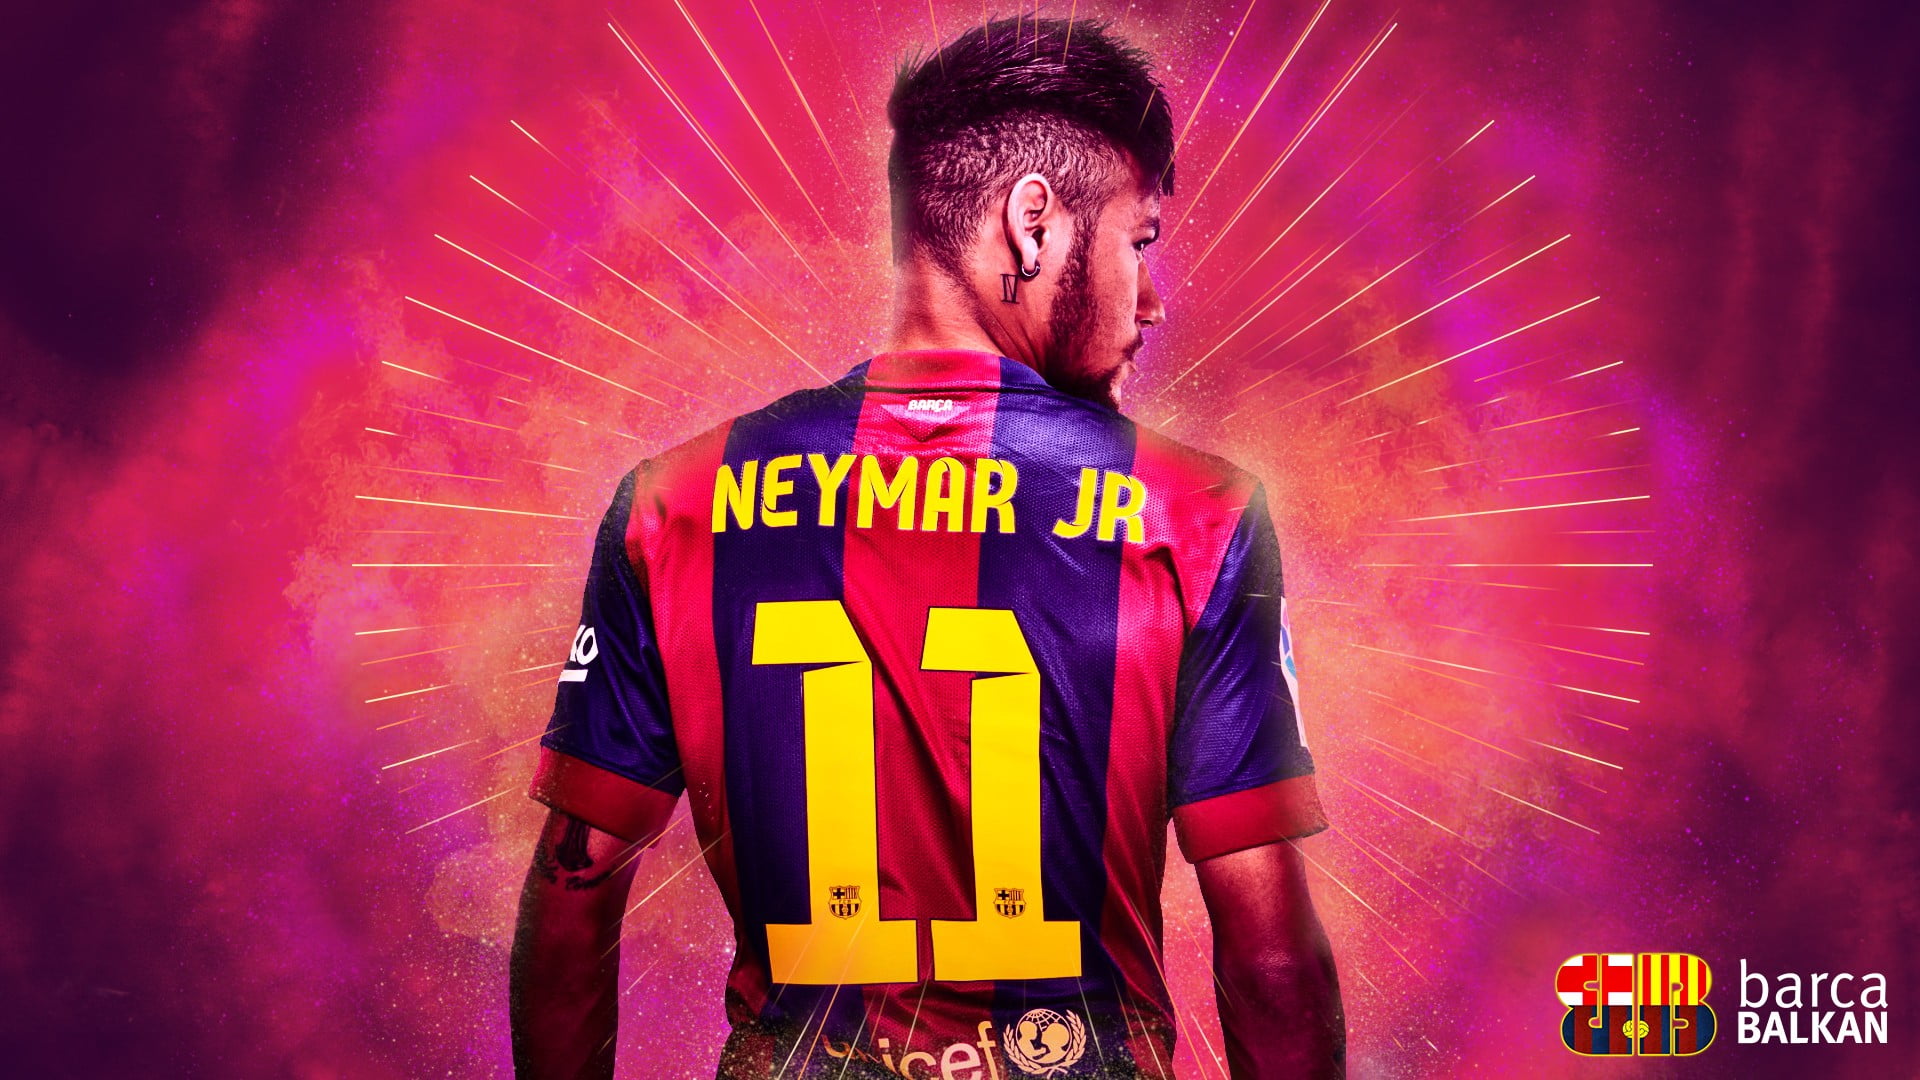 Neymar Jr jersey, Neymar JR., Barcelona, FC Barcelona, barca